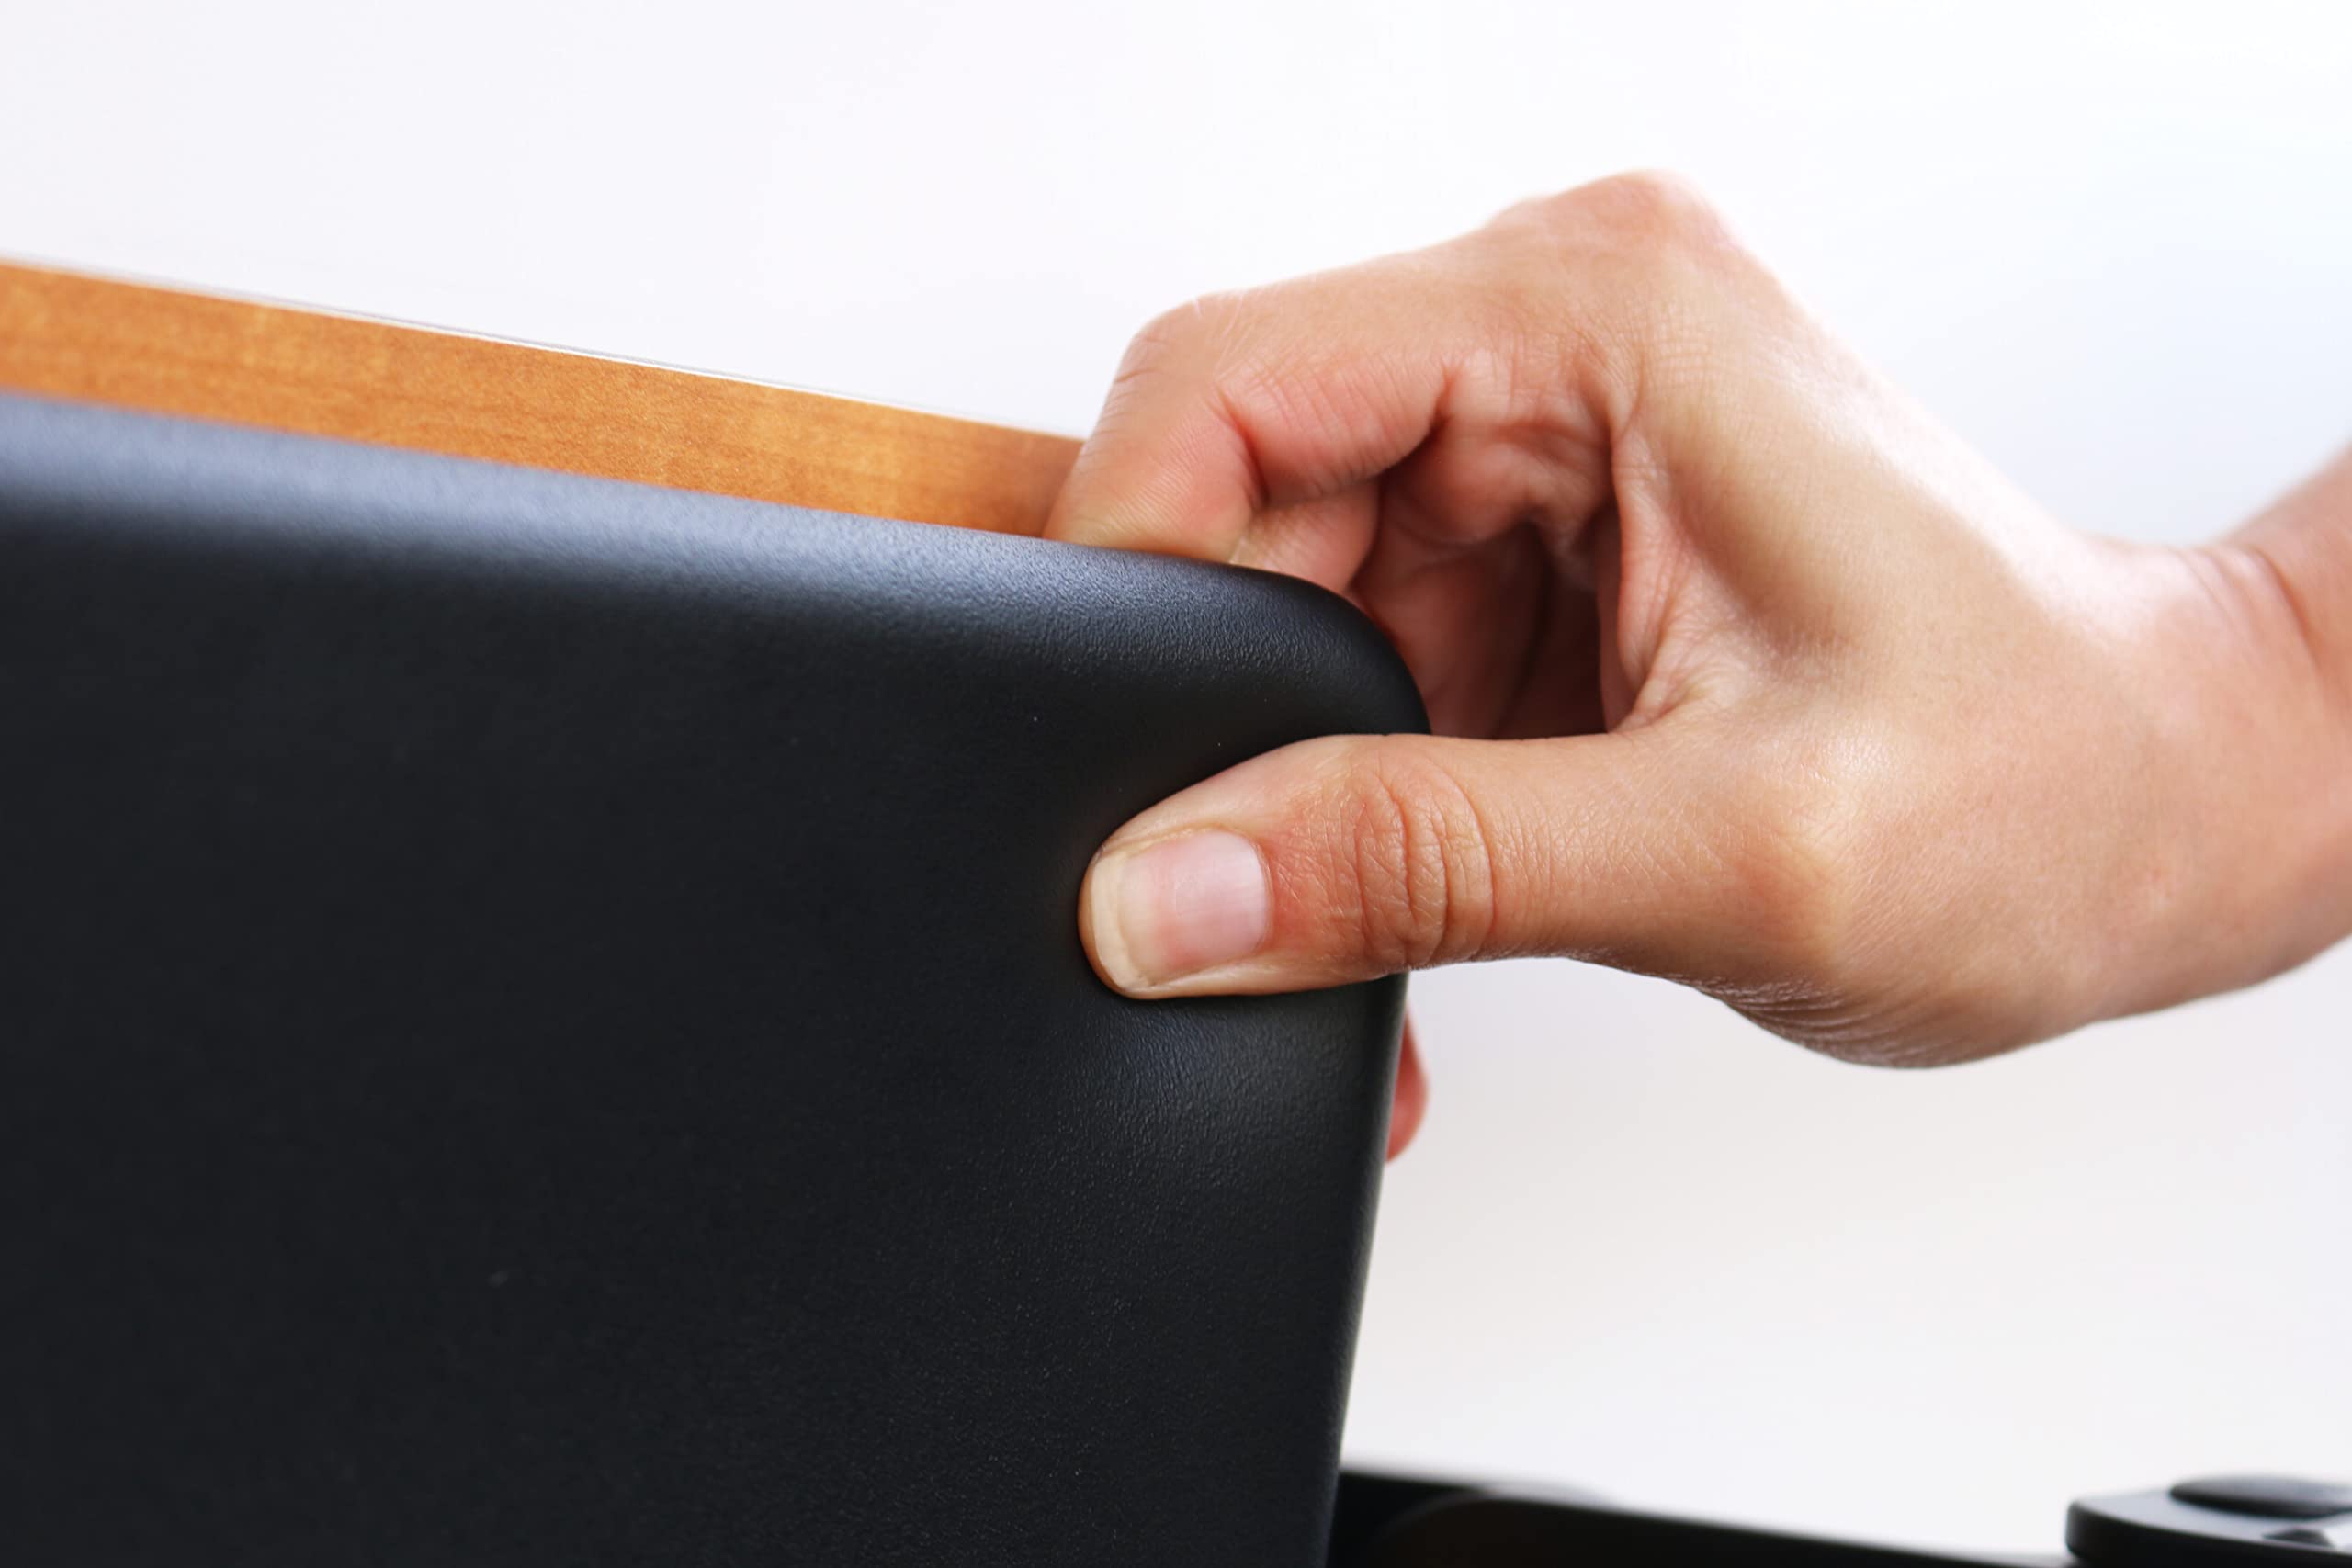 Shower Seat Foam Cushion, Waterproof and Slip-Resistant, Easy to Clean, Black